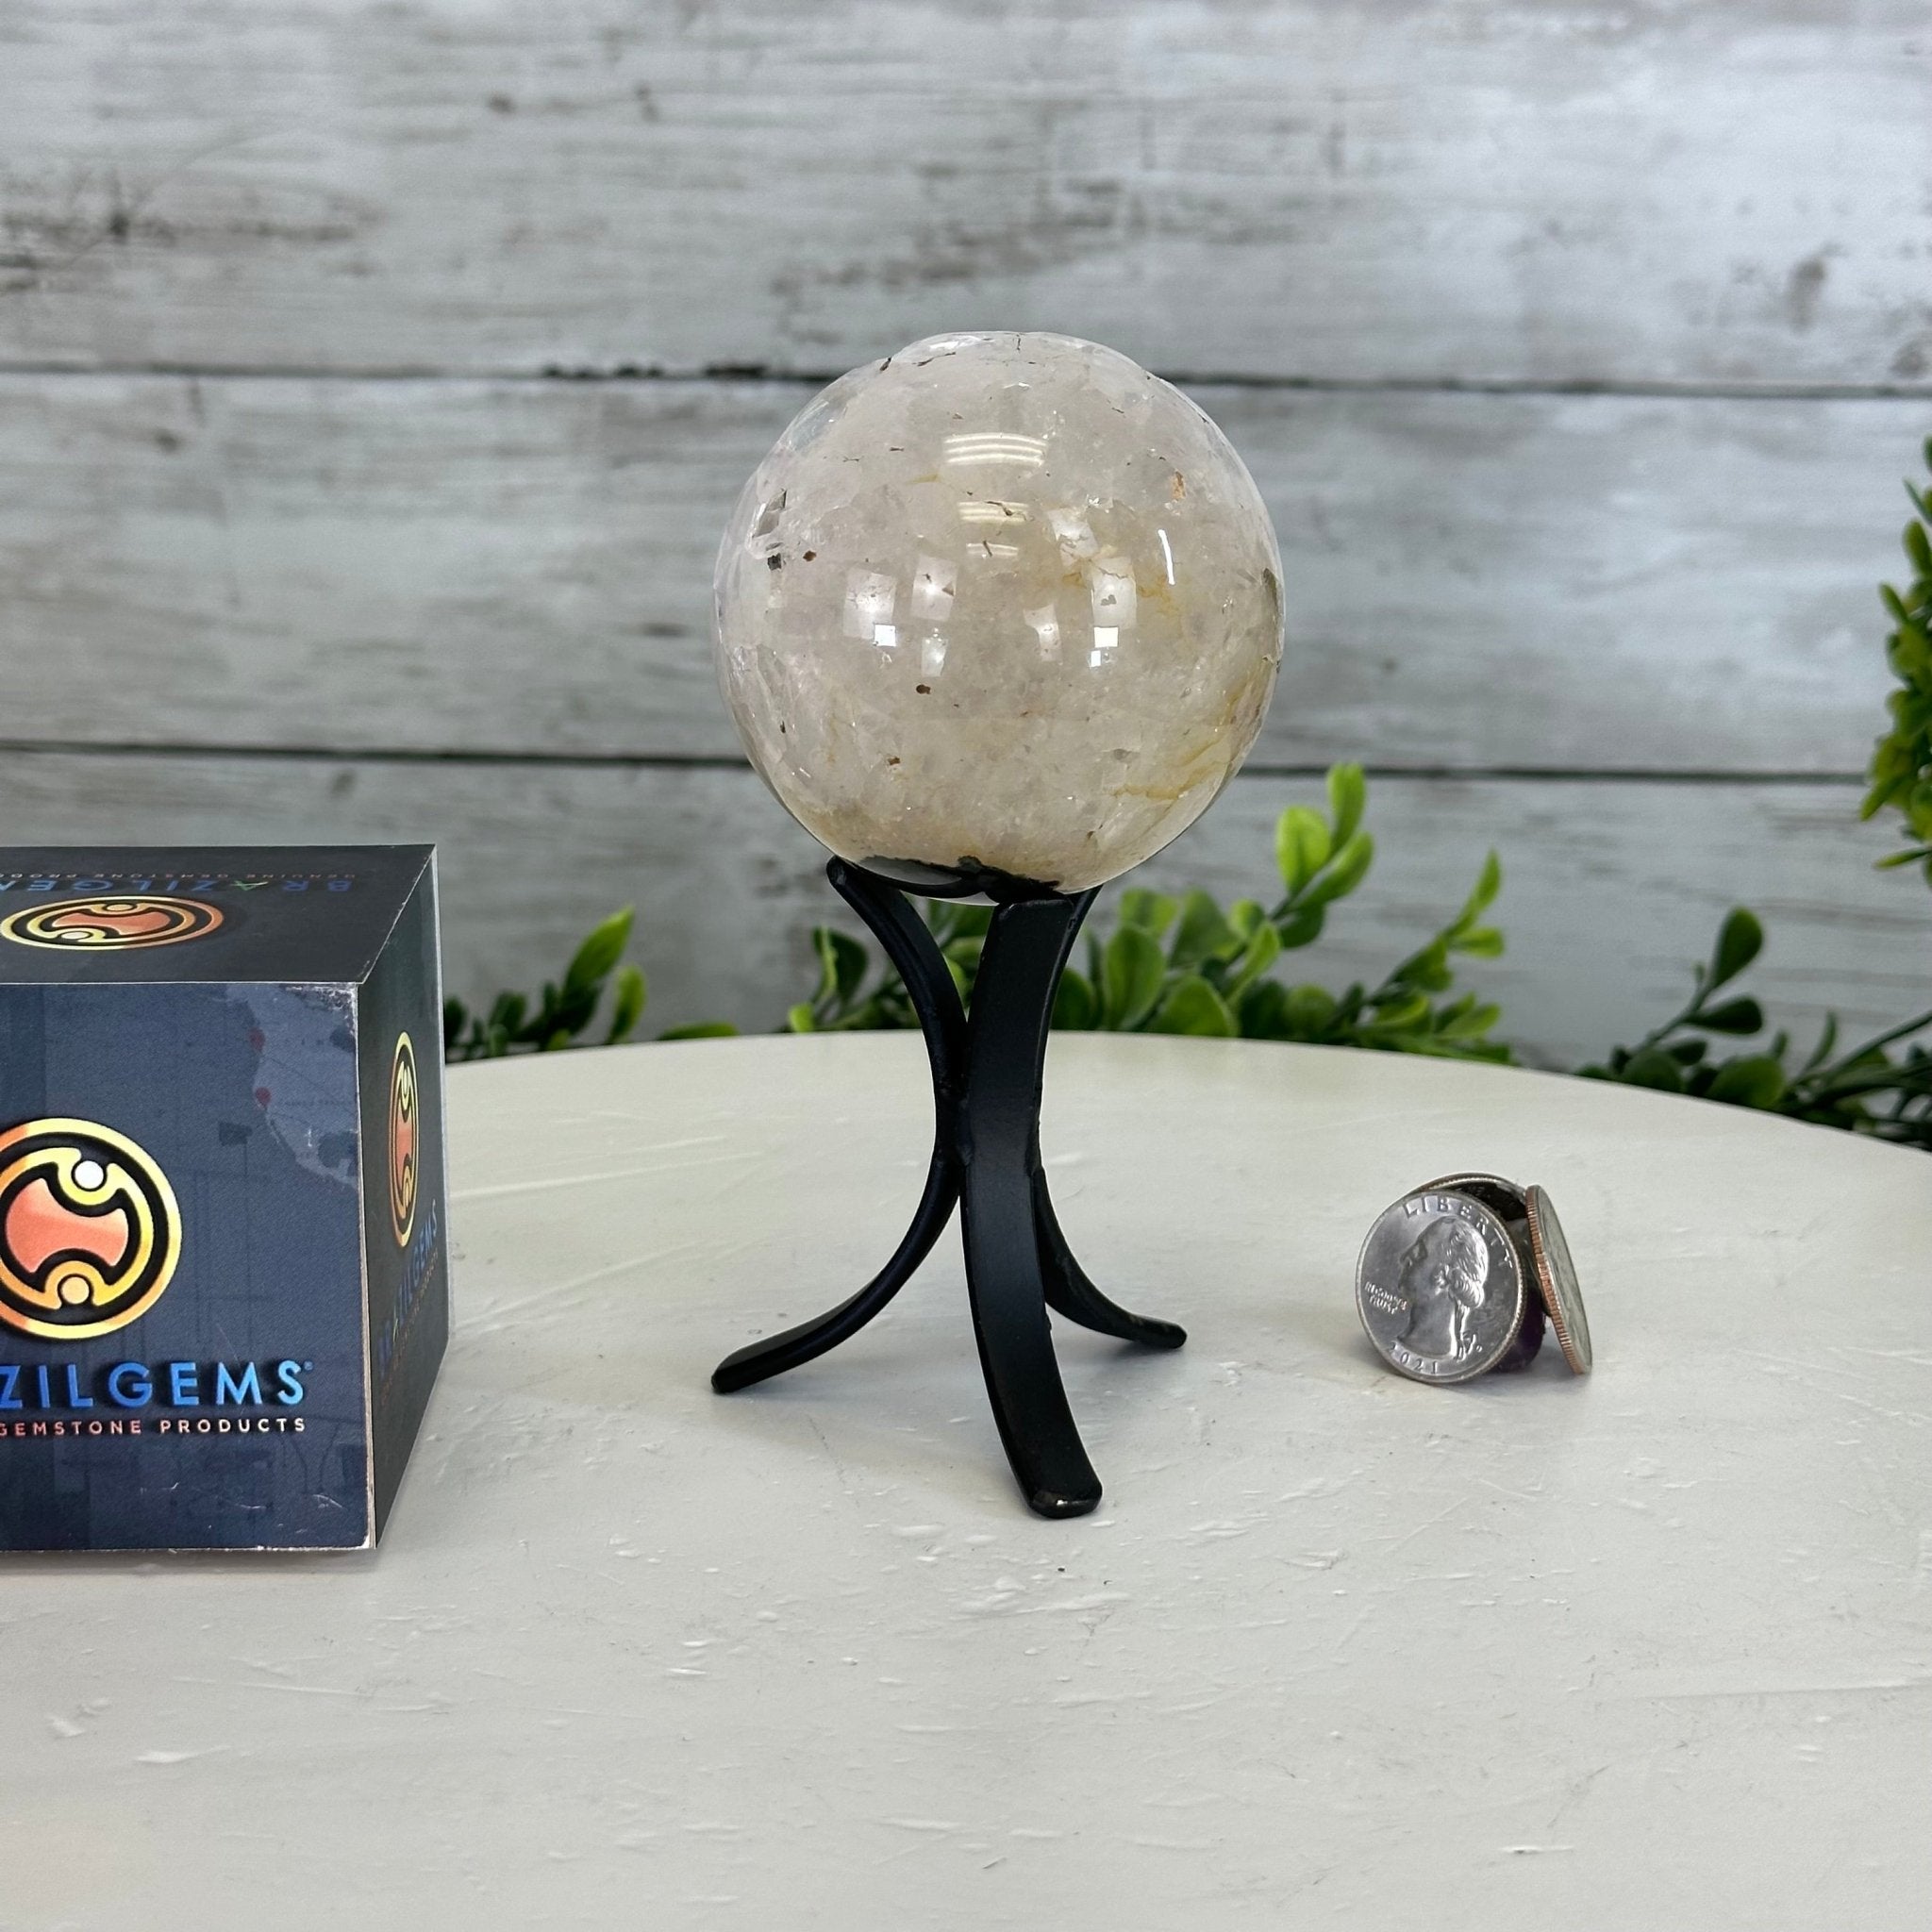 Druzy Amethyst Sphere on a Metal Stand, 0.7 lbs & 5.1" Tall #5630-0030 - Brazil GemsBrazil GemsDruzy Amethyst Sphere on a Metal Stand, 0.7 lbs & 5.1" Tall #5630-0030Spheres5630-0030